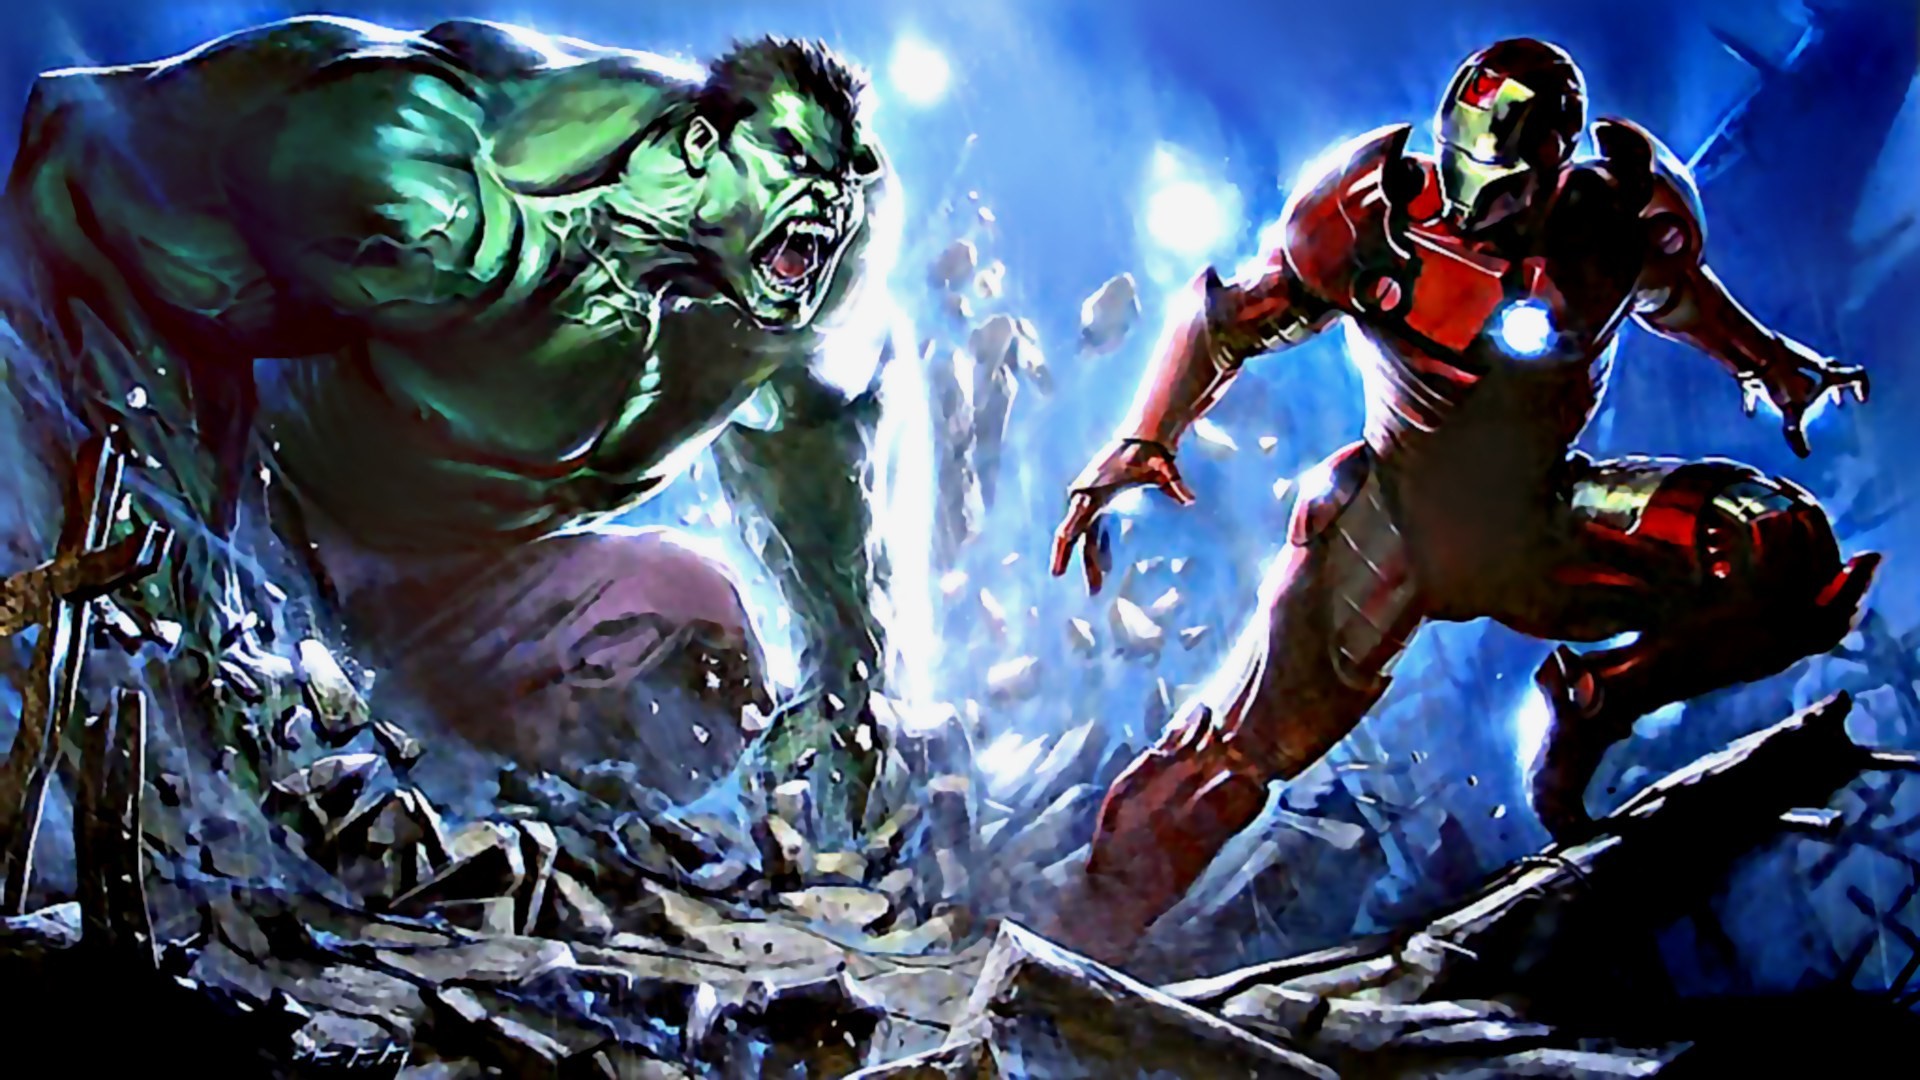 1920x1080 Hulk Vs Hulkbuster Wallpapers 73 Images